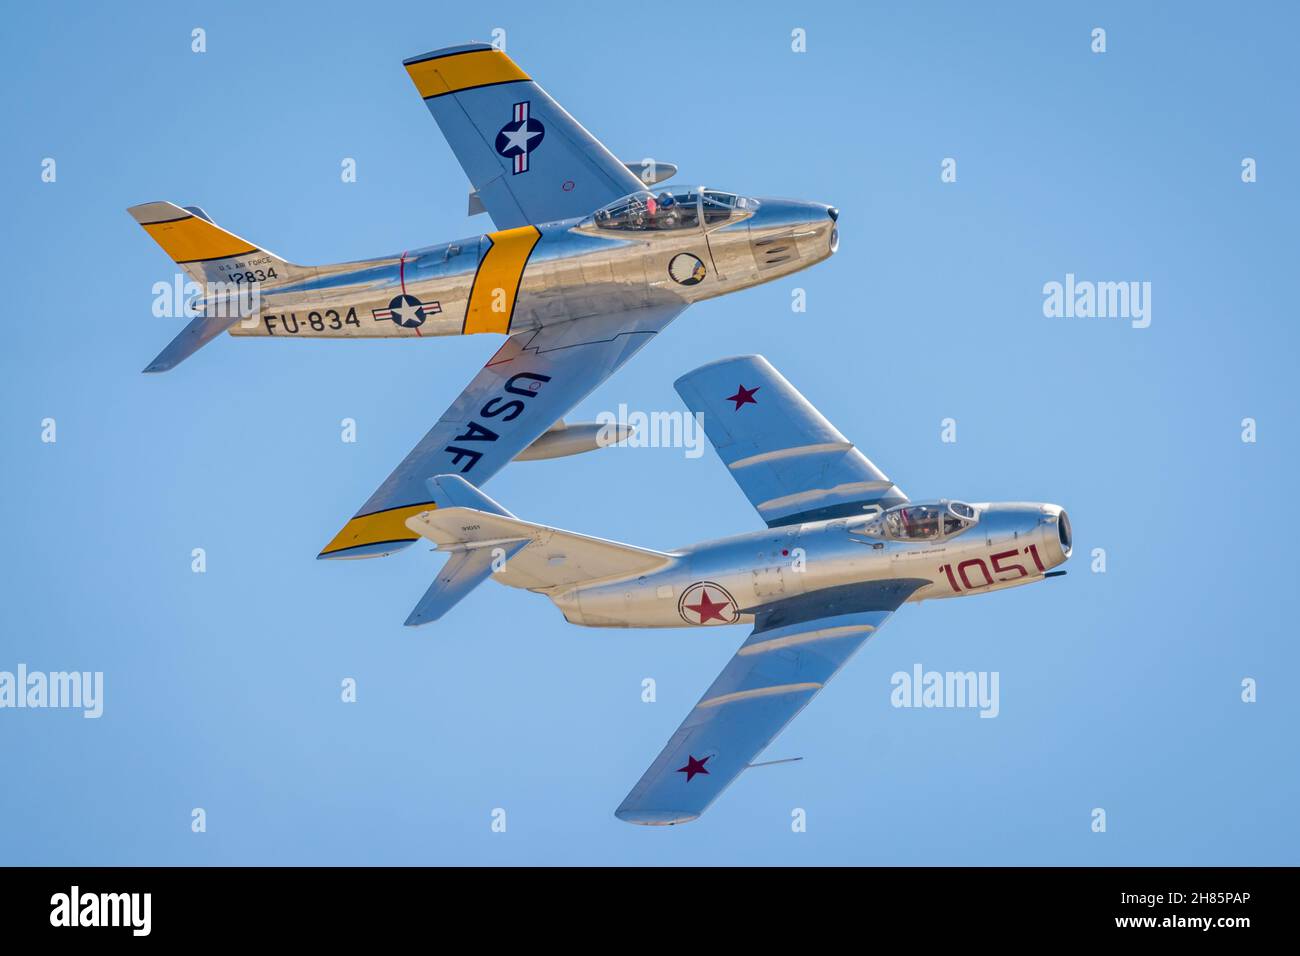 RIVERSIDE, STATI UNITI - 18 apr 2016: F-86 nordamericana Sabre e Mikoyan-Gurevich MIG-15 al Riverside Air Show Foto Stock